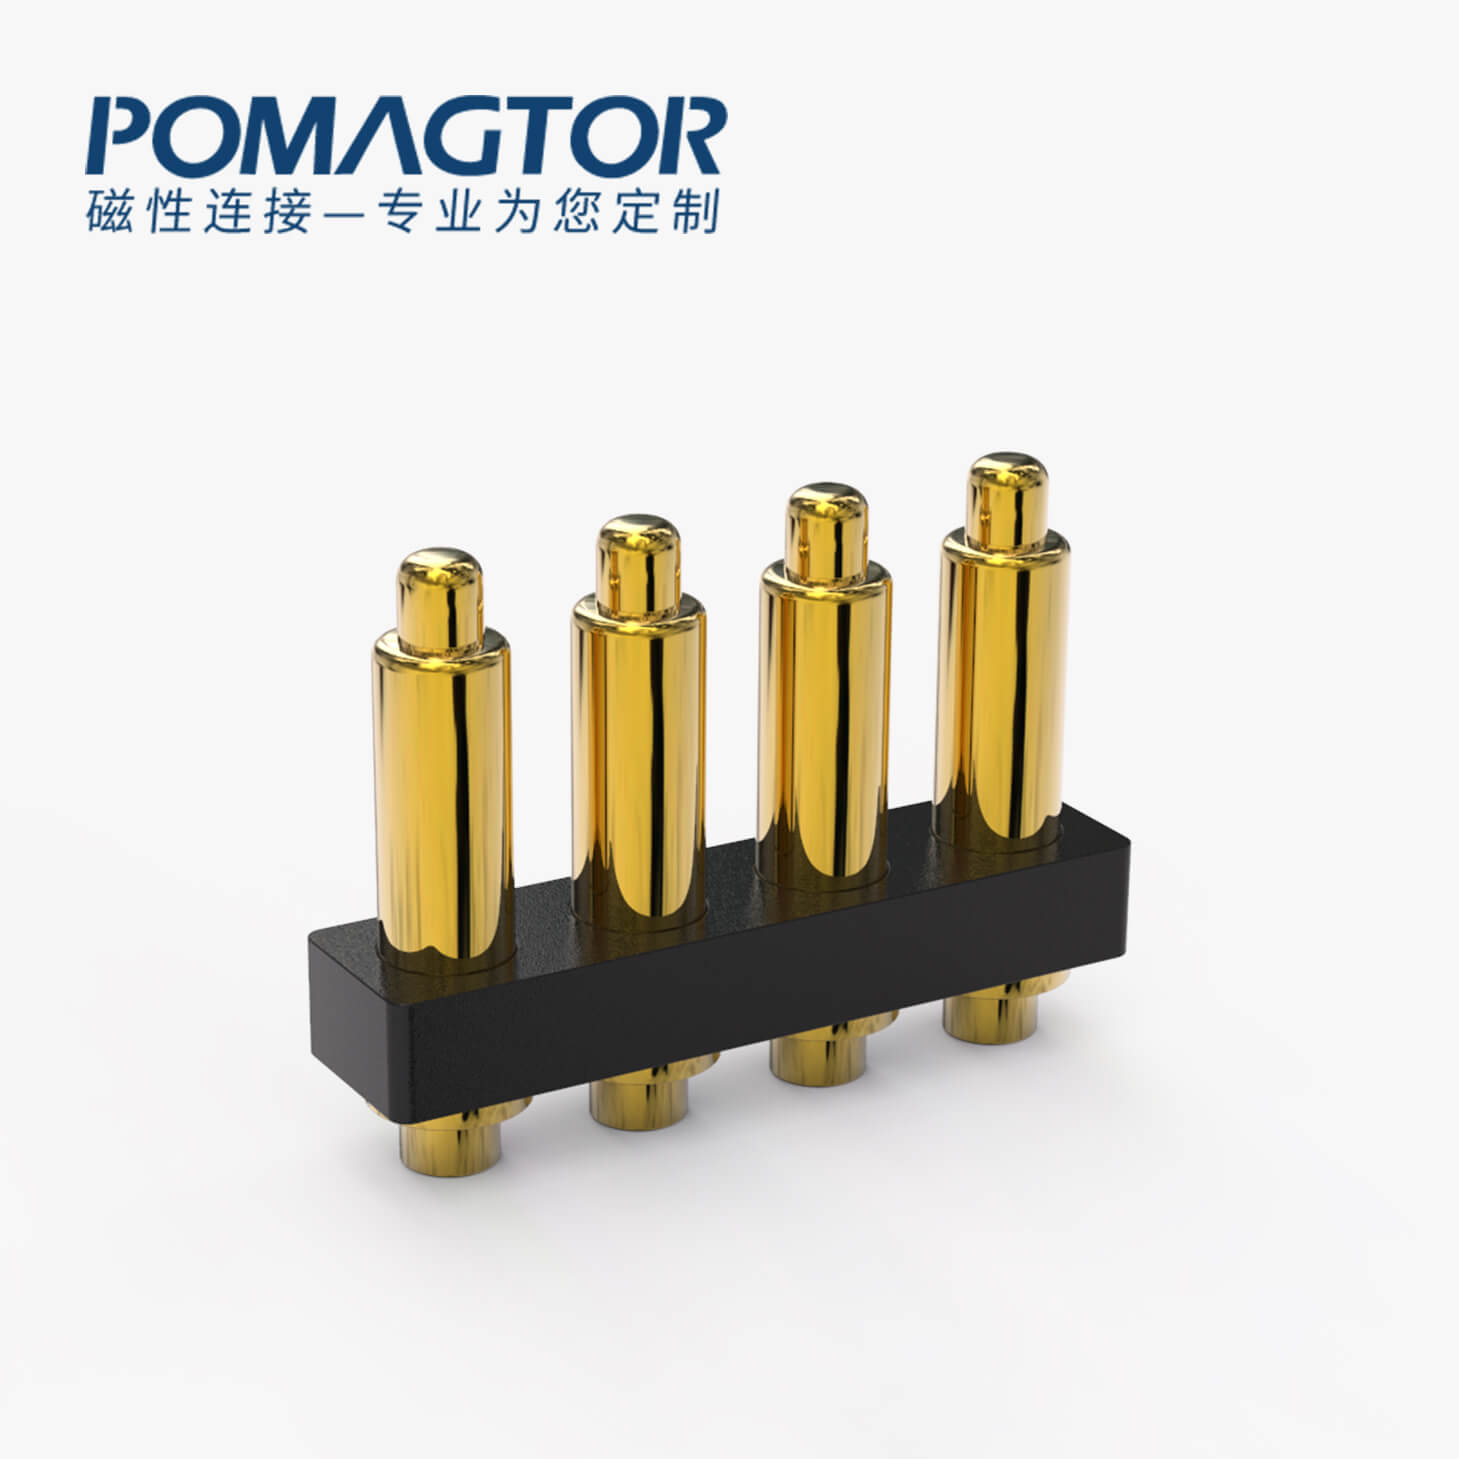 POGO PIN连接器 DIP式：4PIN，电镀黄铜Au3u，电压12V，电流1A，工作行程0.6mm:60gfMax，弹力30000次+，工作温度-30°~85°